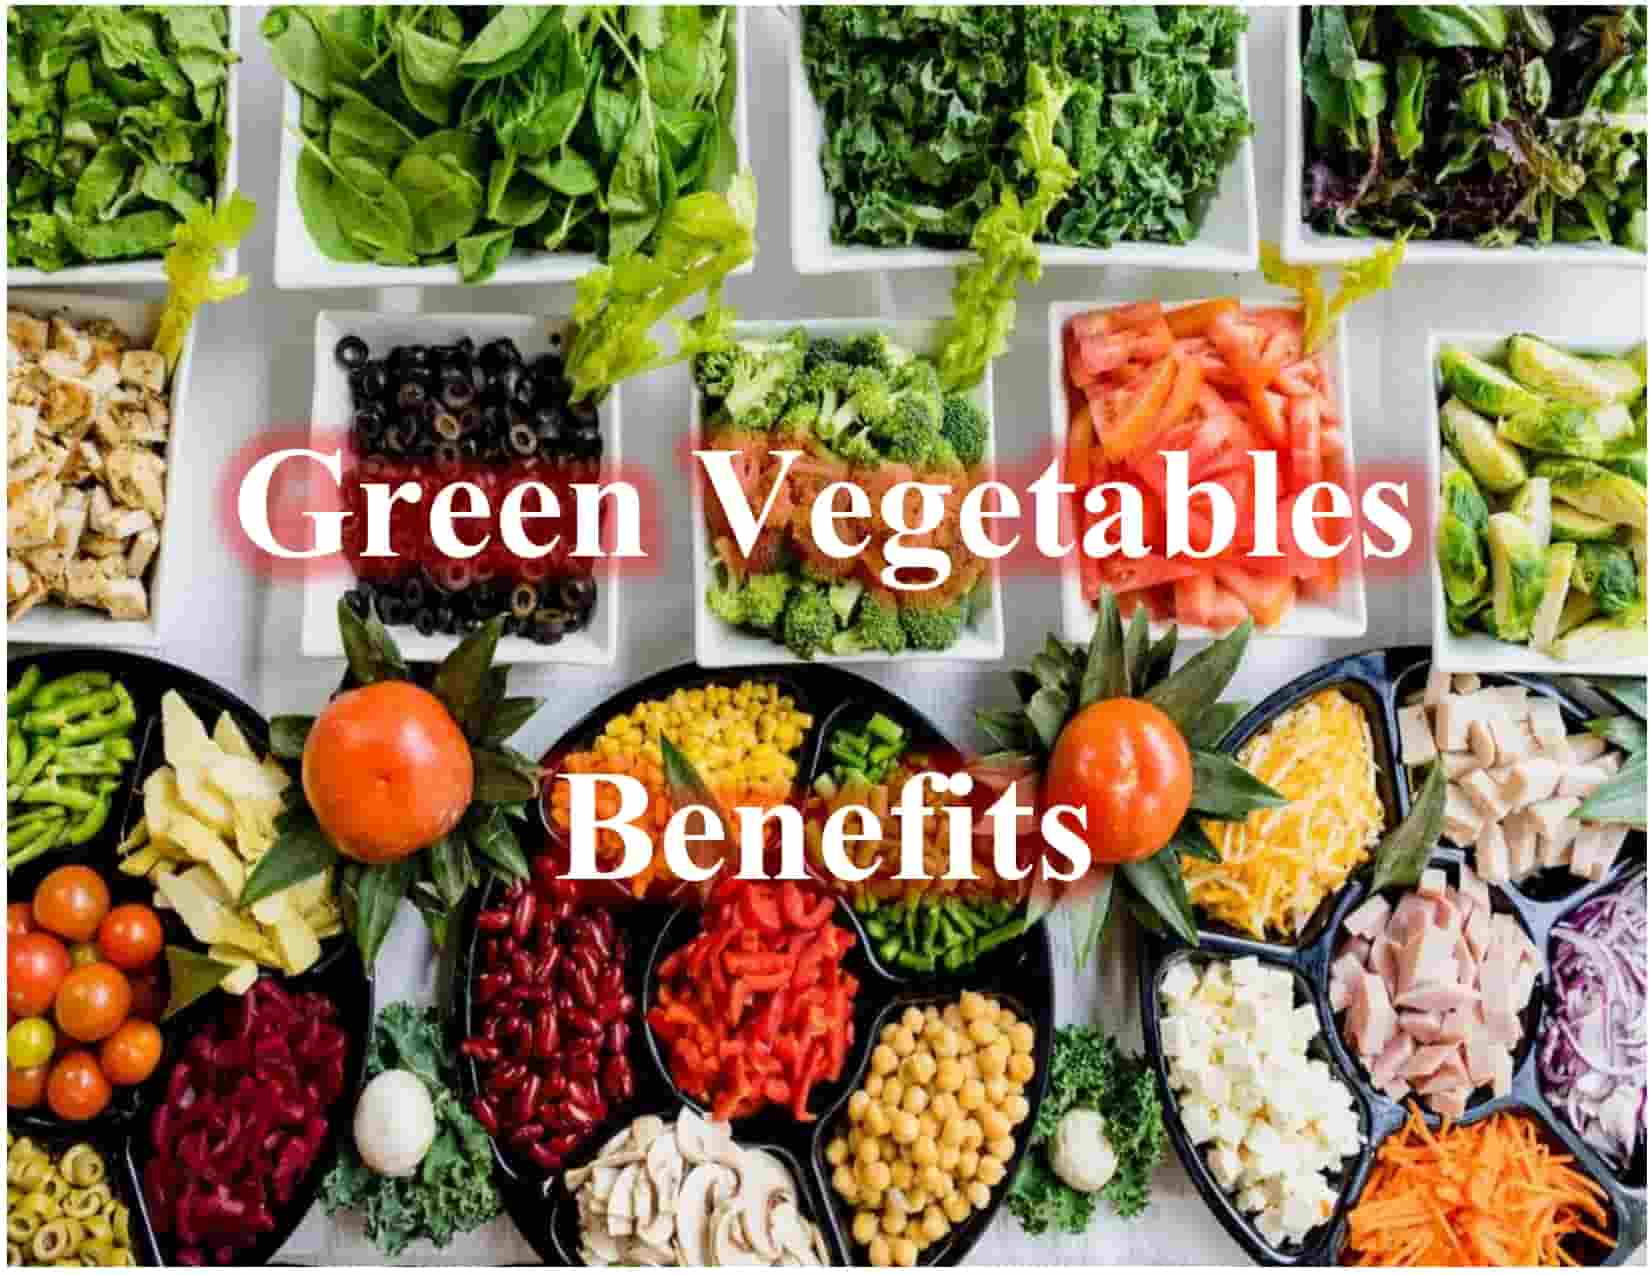 Green Vegetables Benefits जान लो!